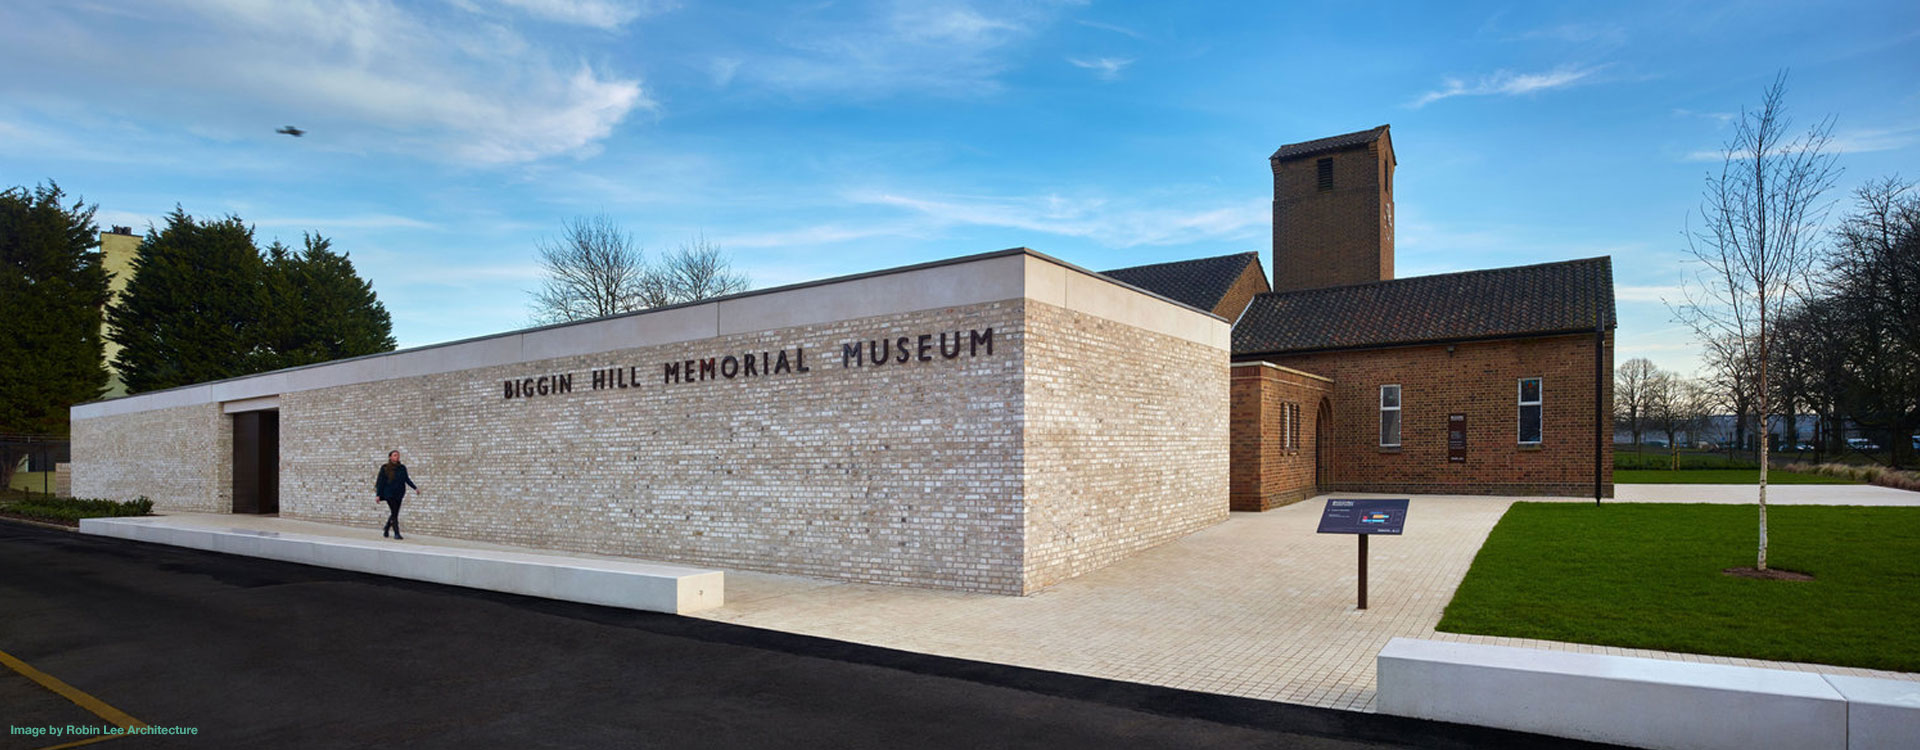 Project News: Biggin Hill Memorial Museum